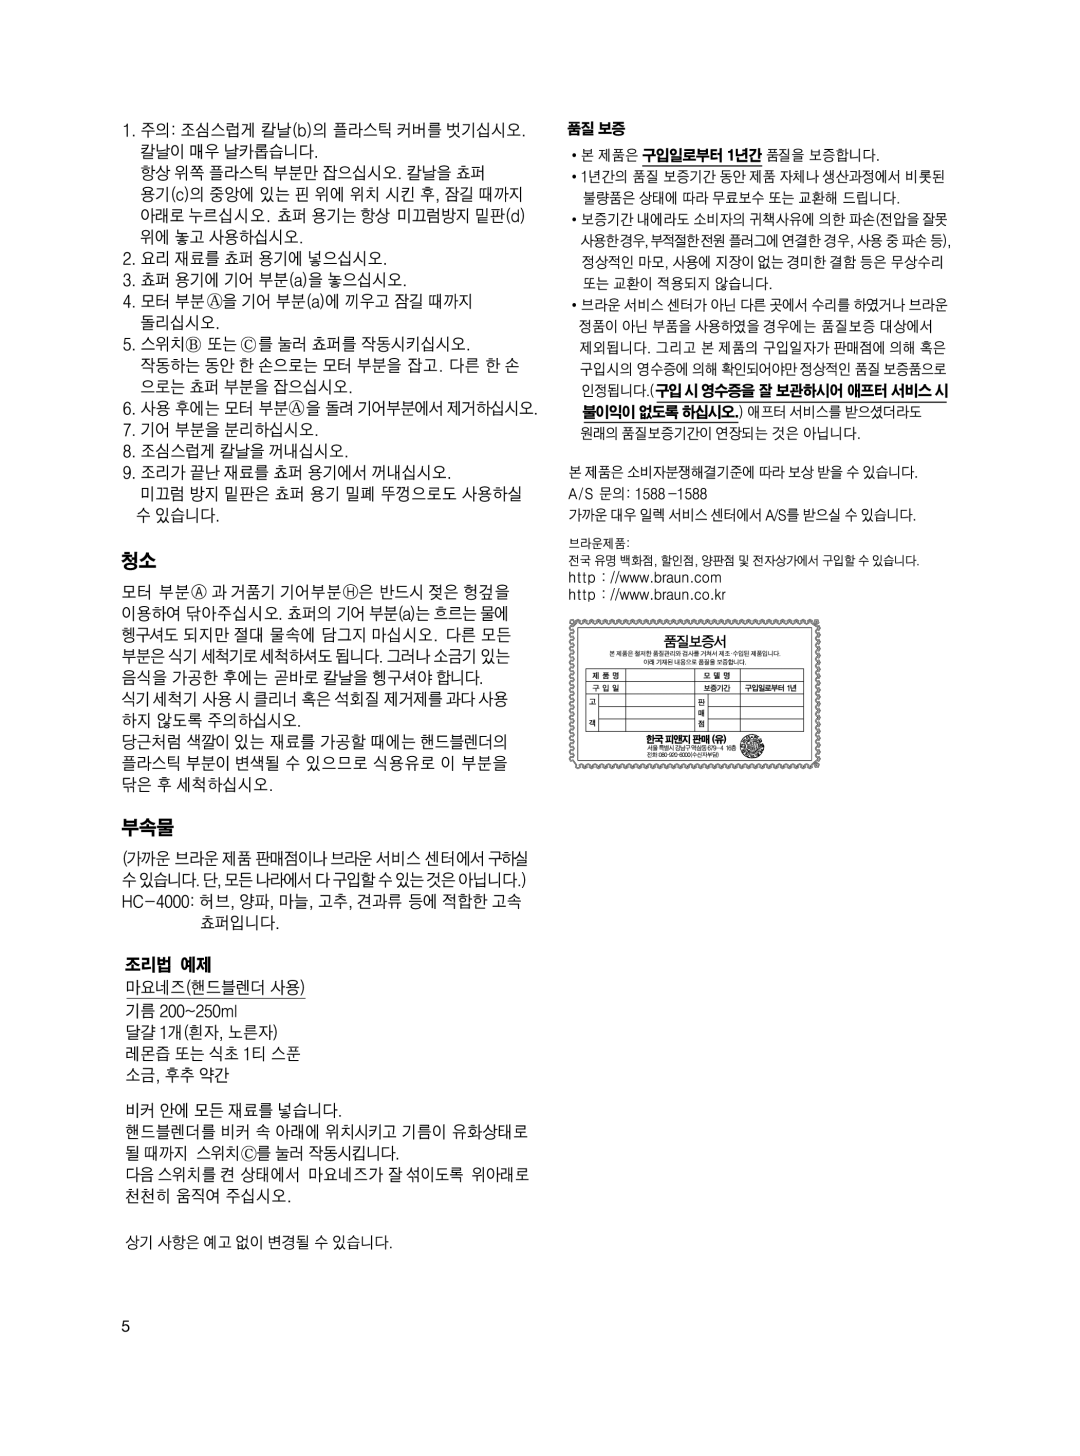 Braun MR 4050 CA manual 